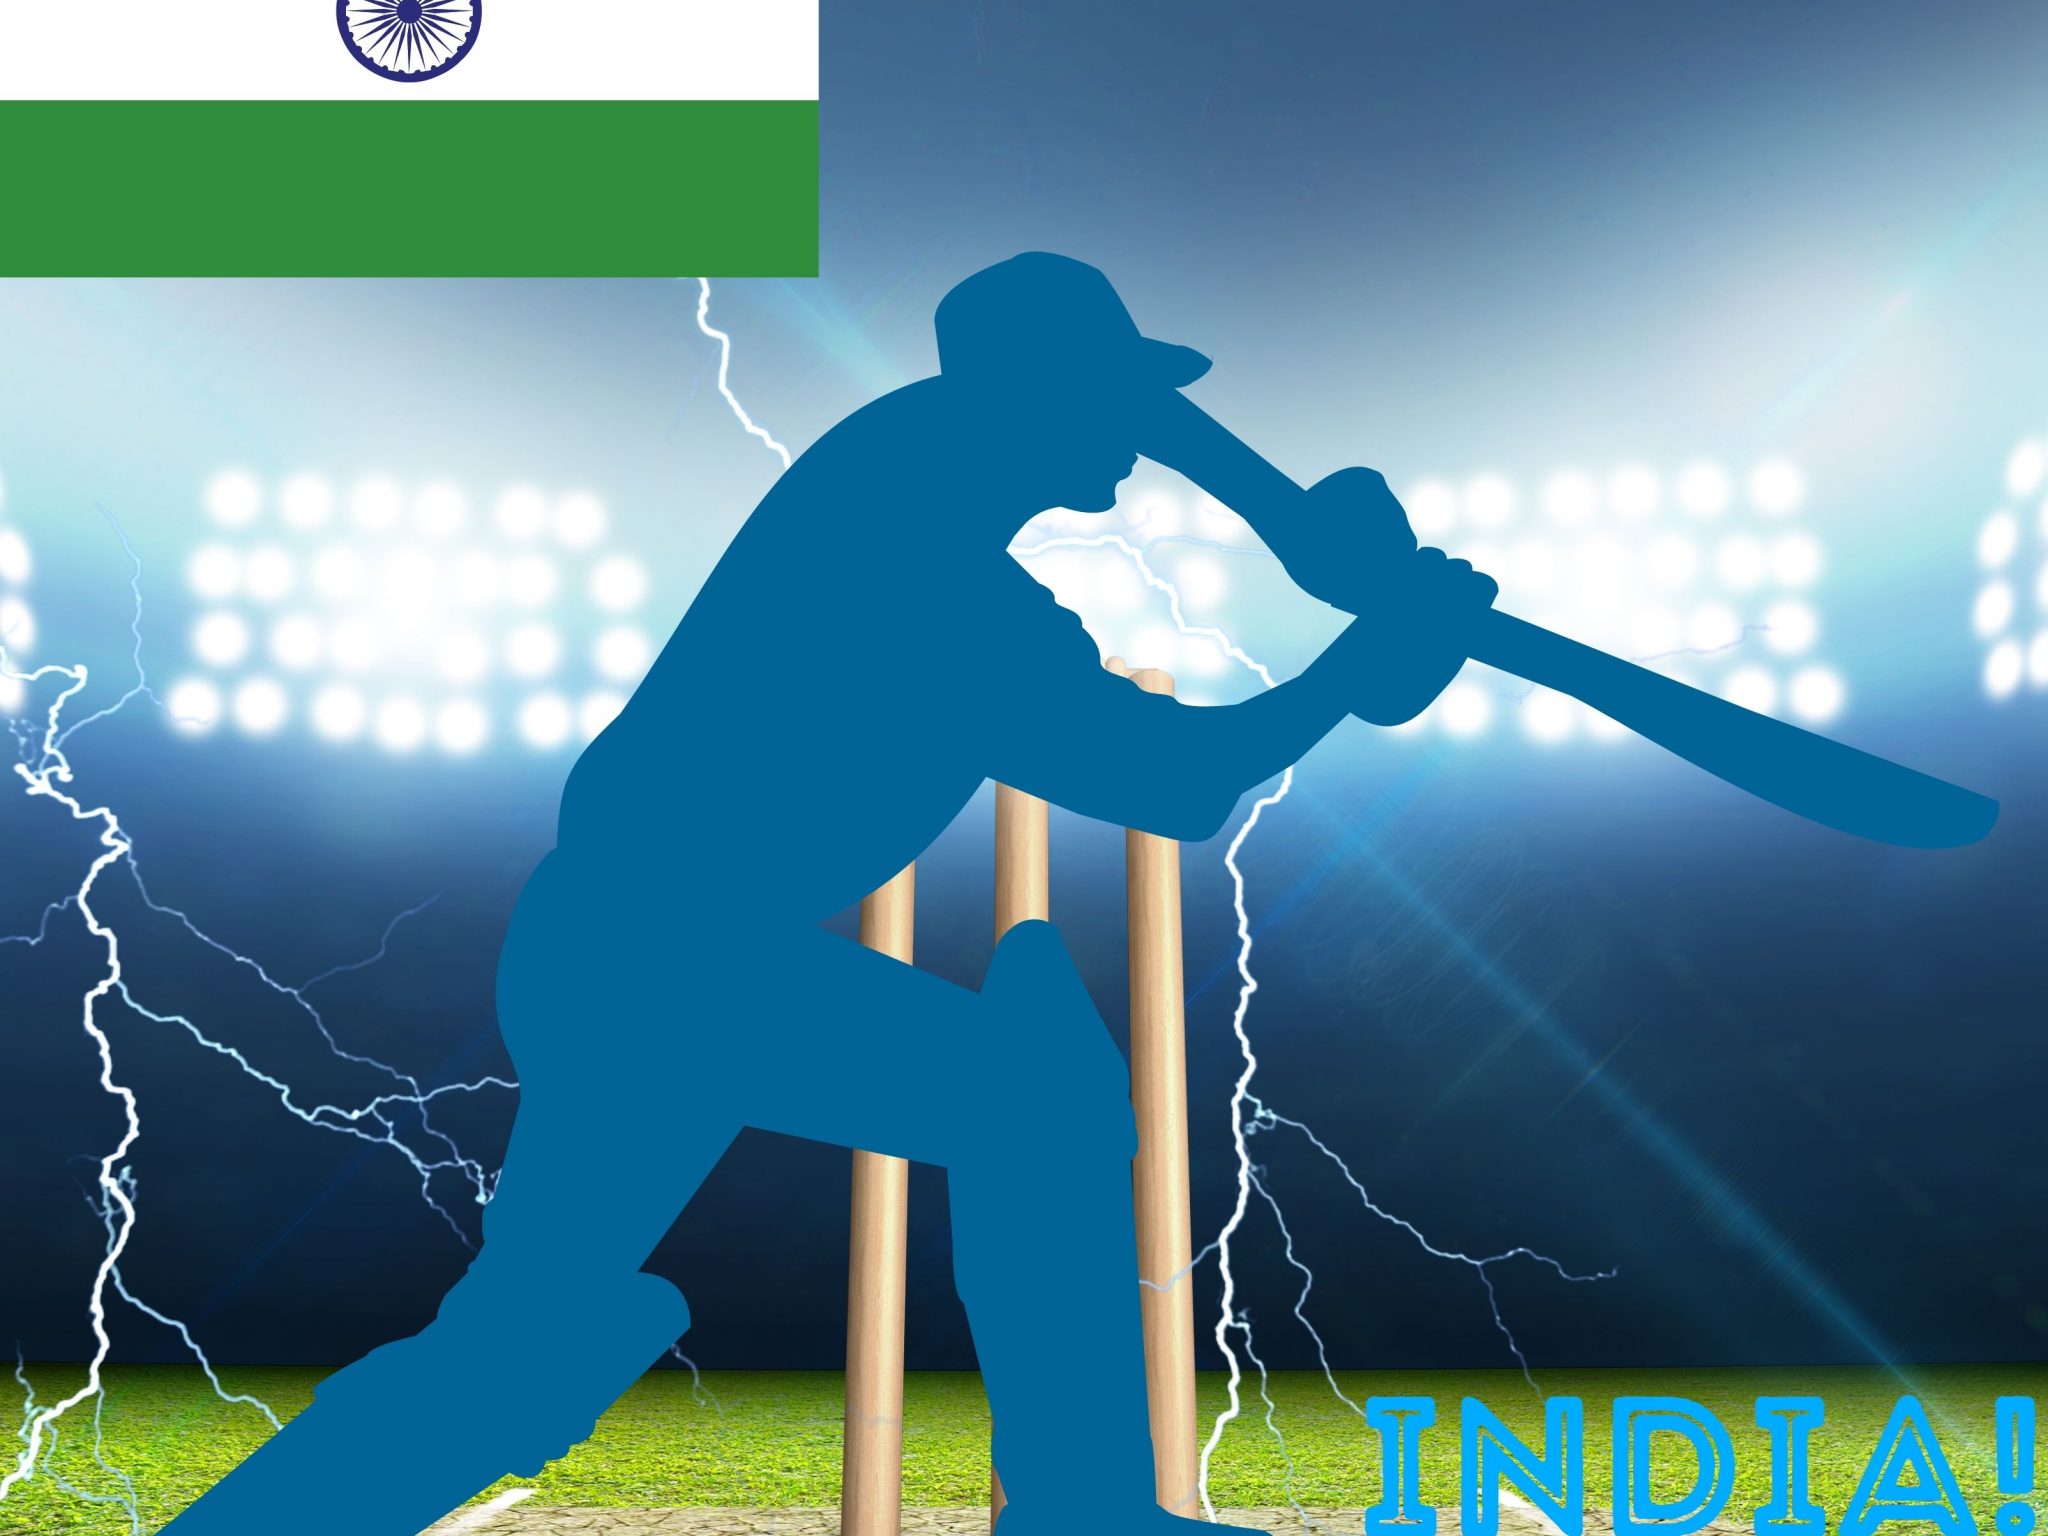 2048x1536 wallpaper India Cricket Stadium iPad Wallpaper 2048x1536 pixels resolution